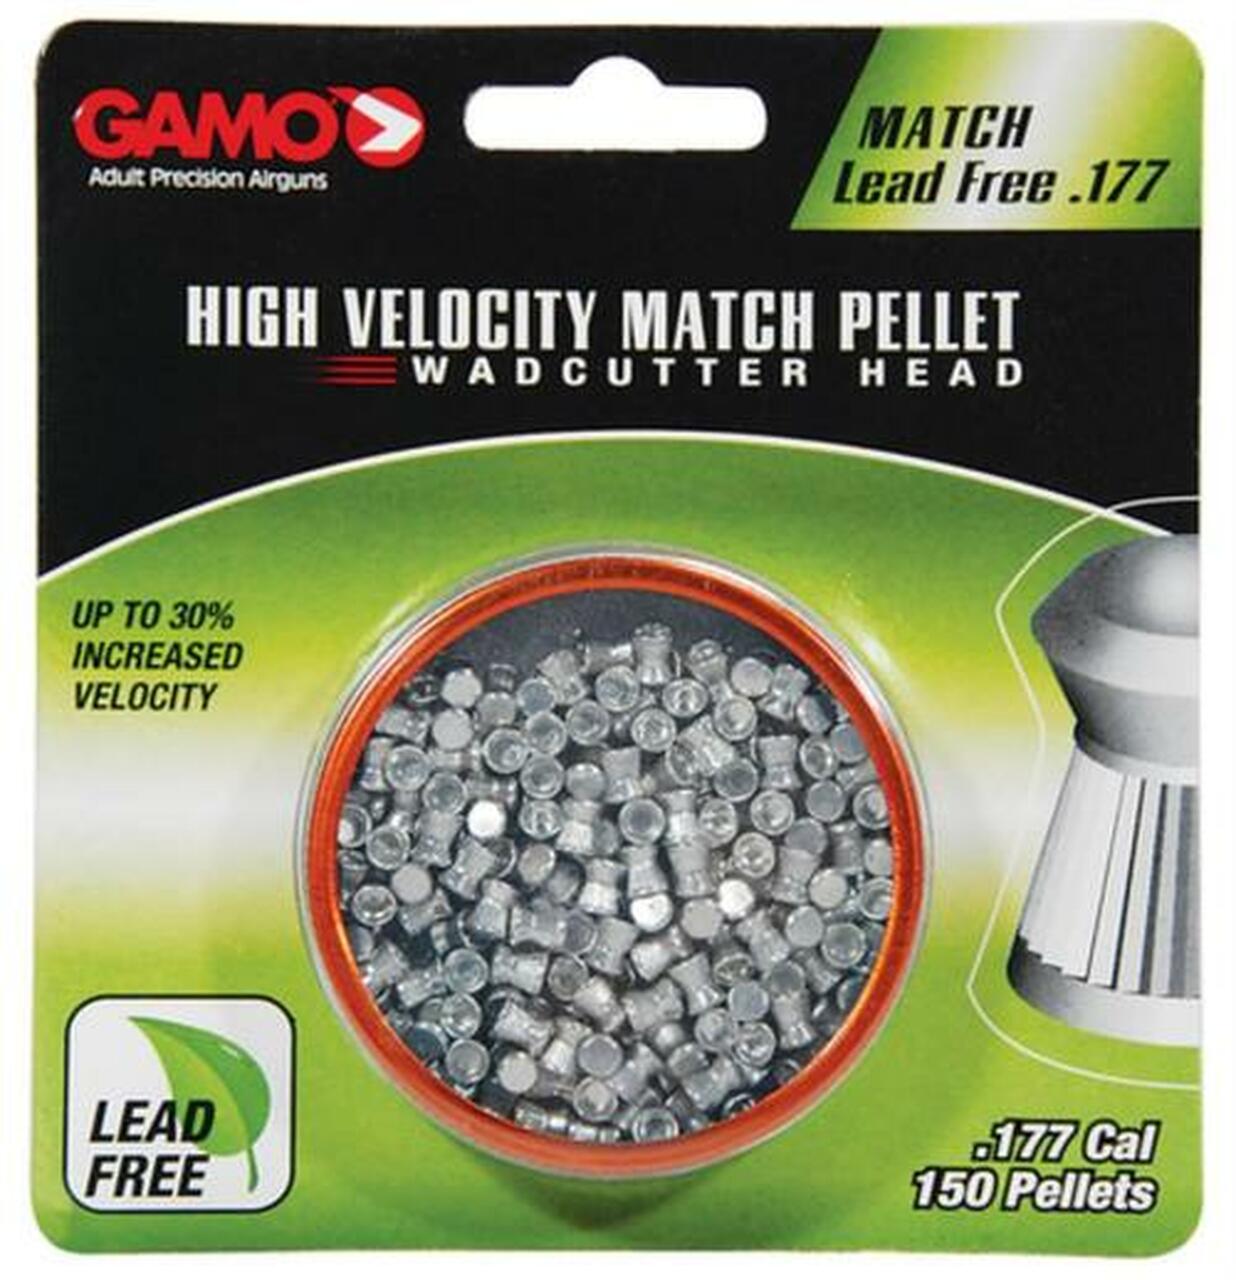 Image of Gamo Match Lead Free Pellets .177 Caliber Flat Nose 150 Per Blister Pack